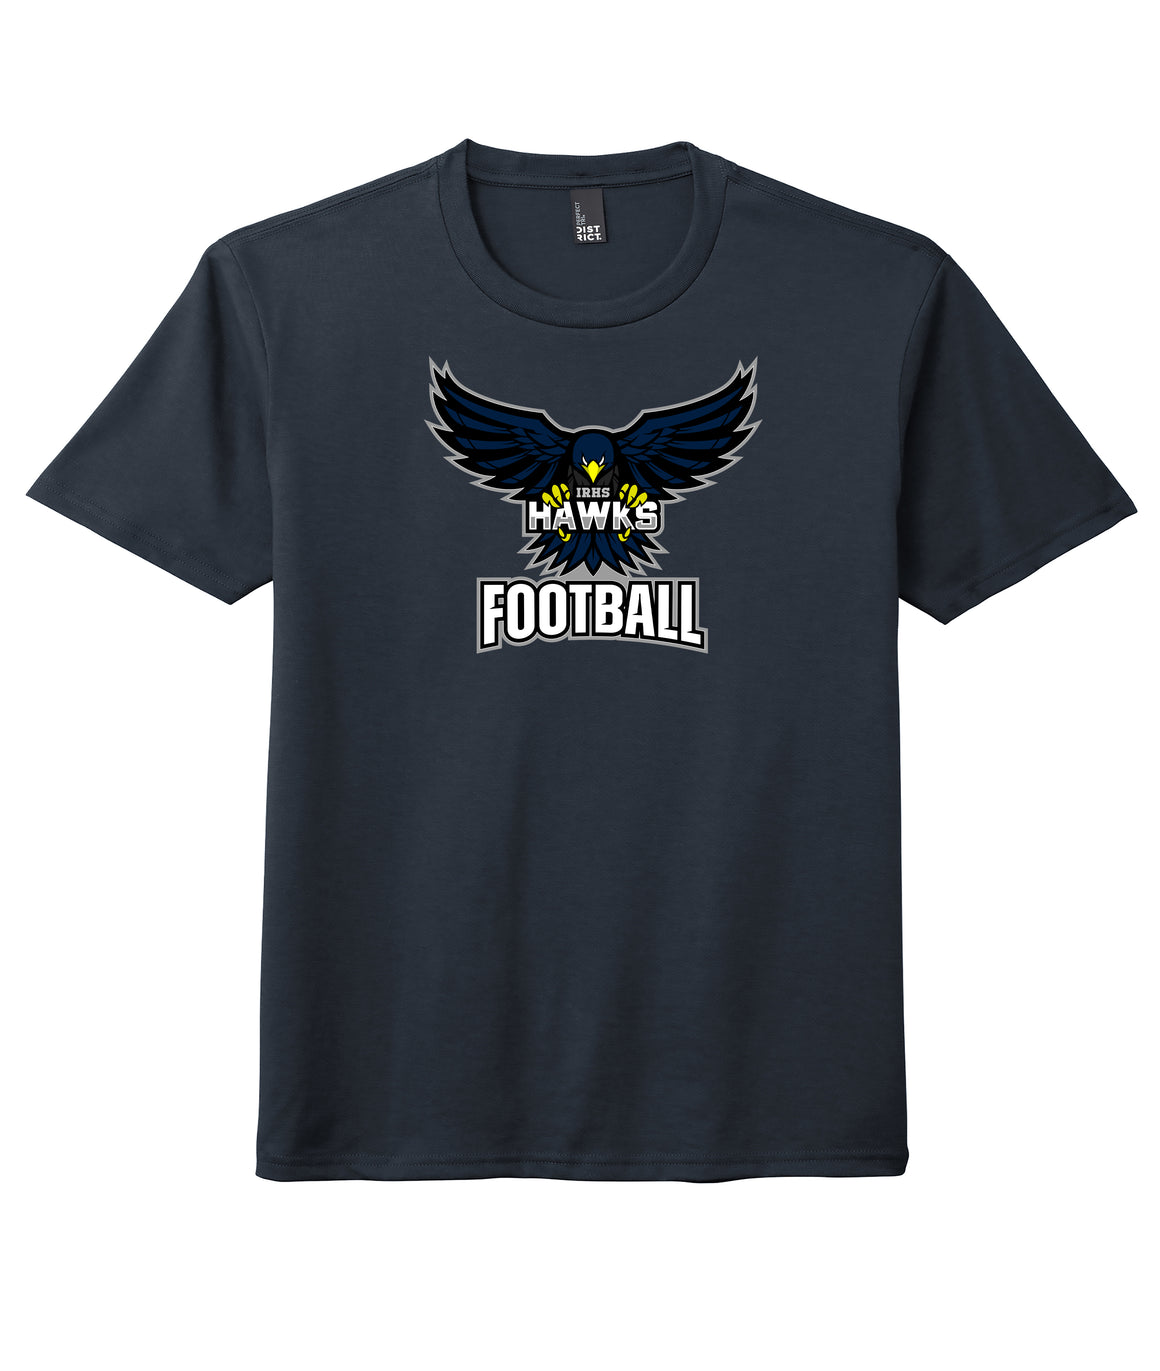 Ironwood Ridge High School Football Hawks Shirt